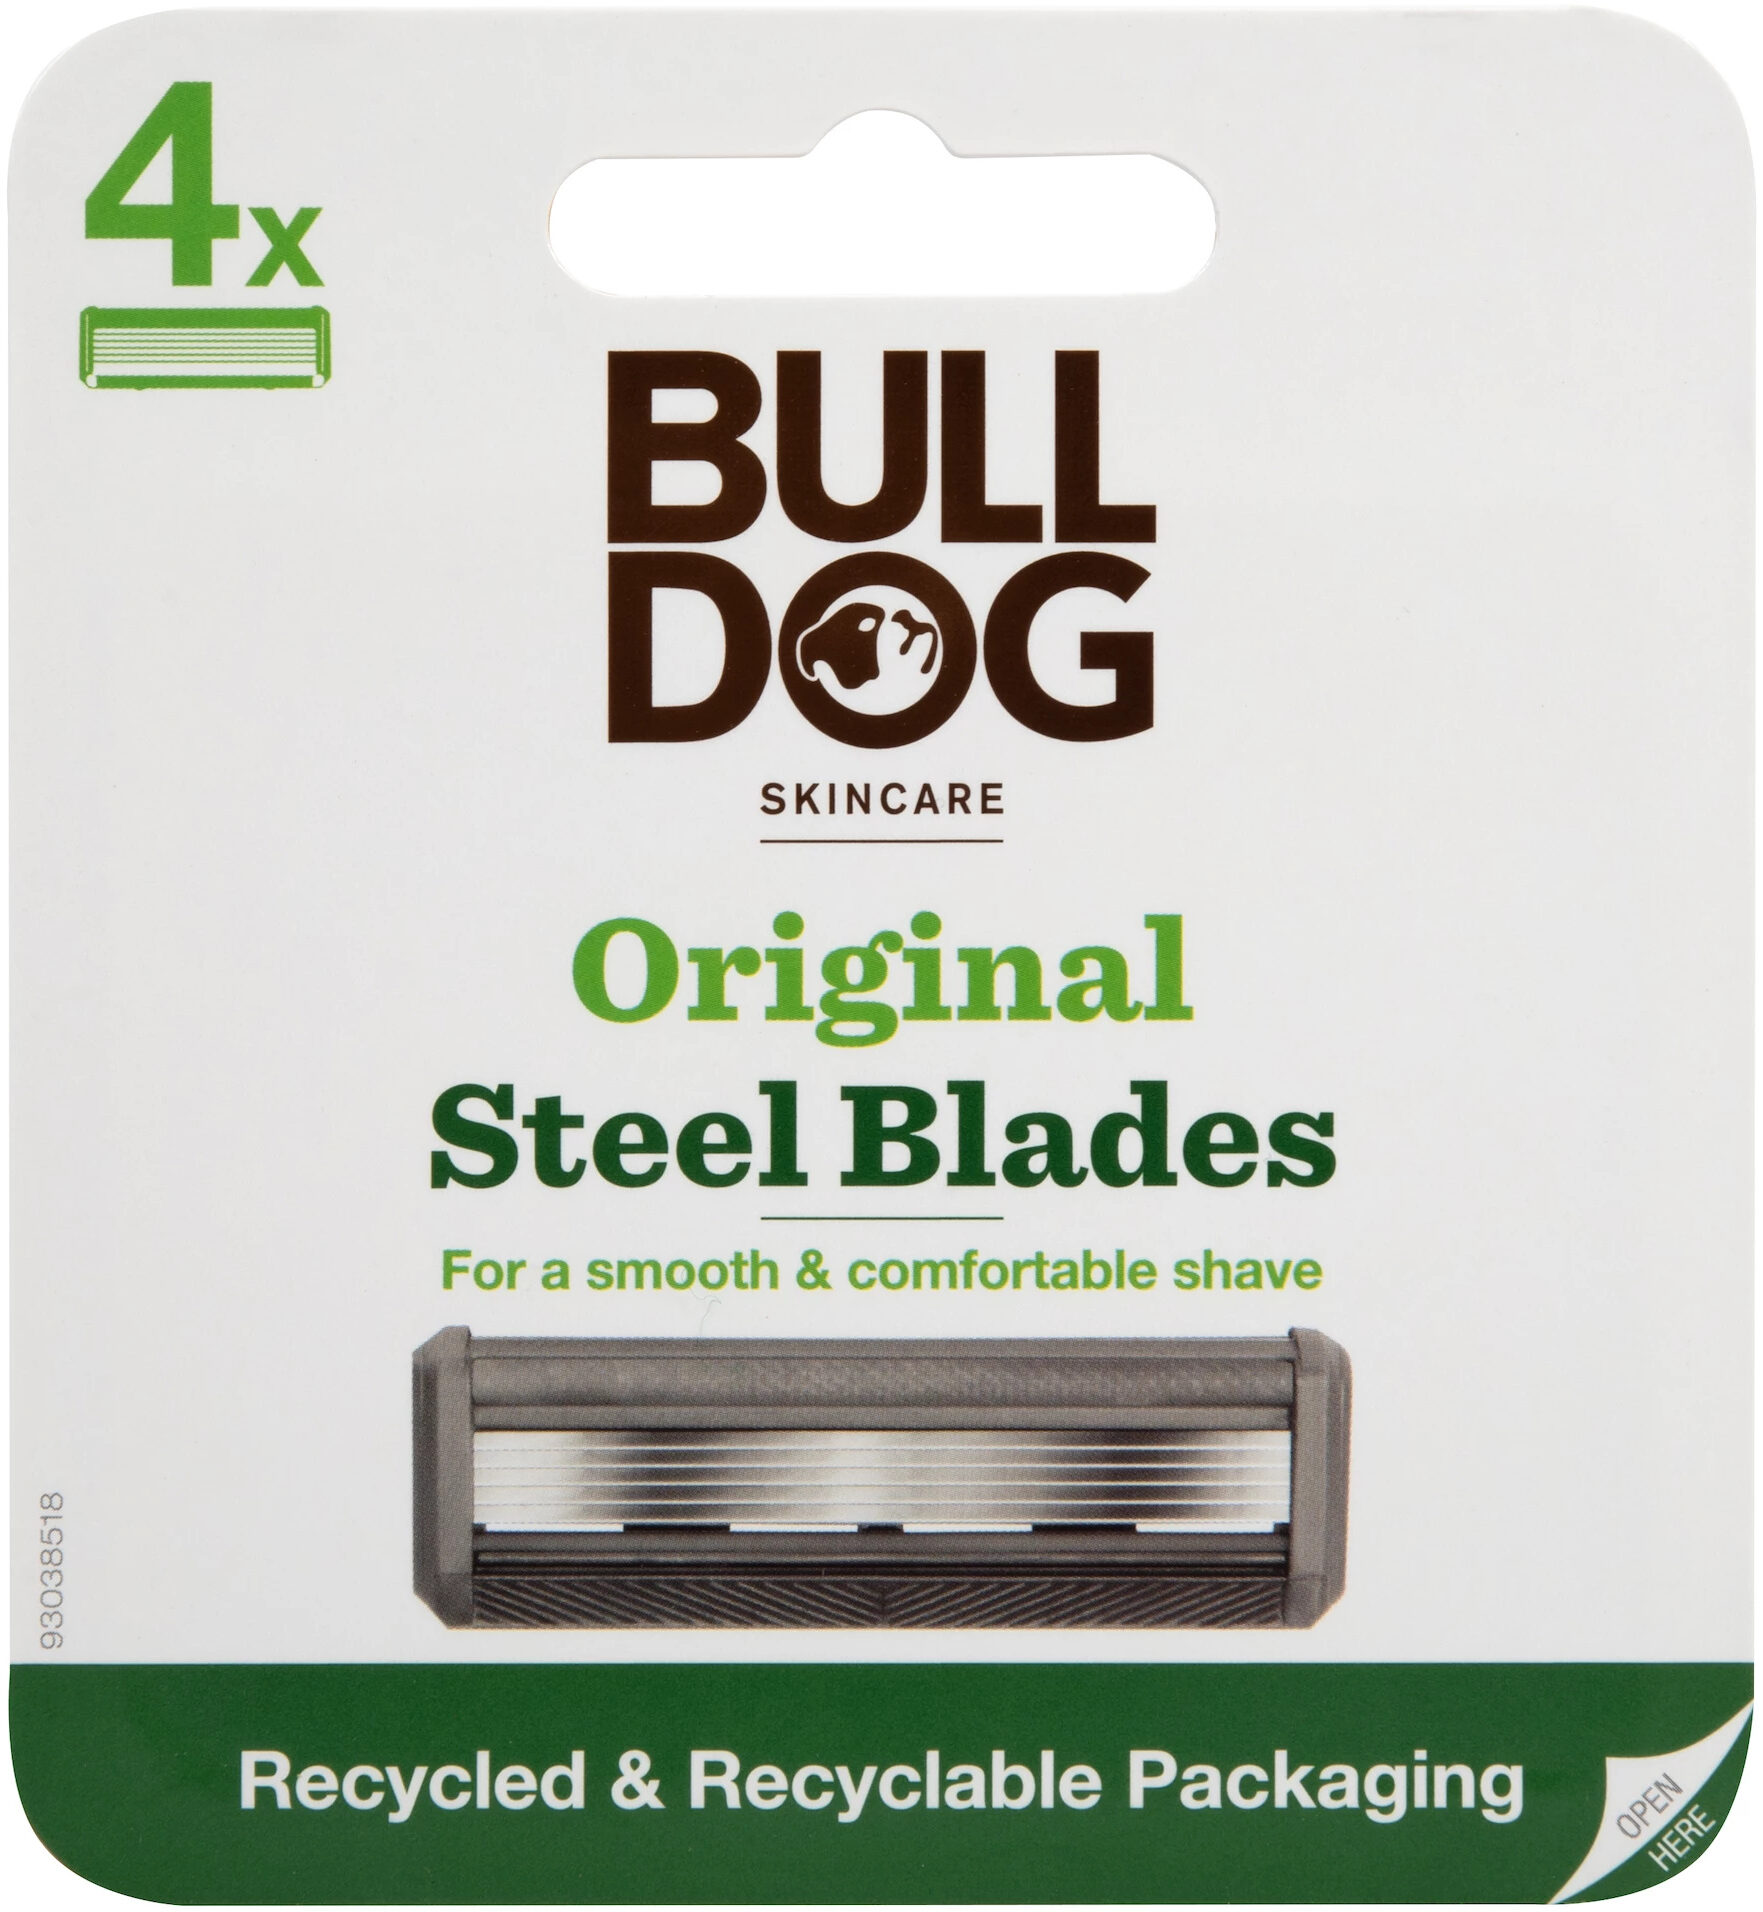 Original Steel Blades - Product - en